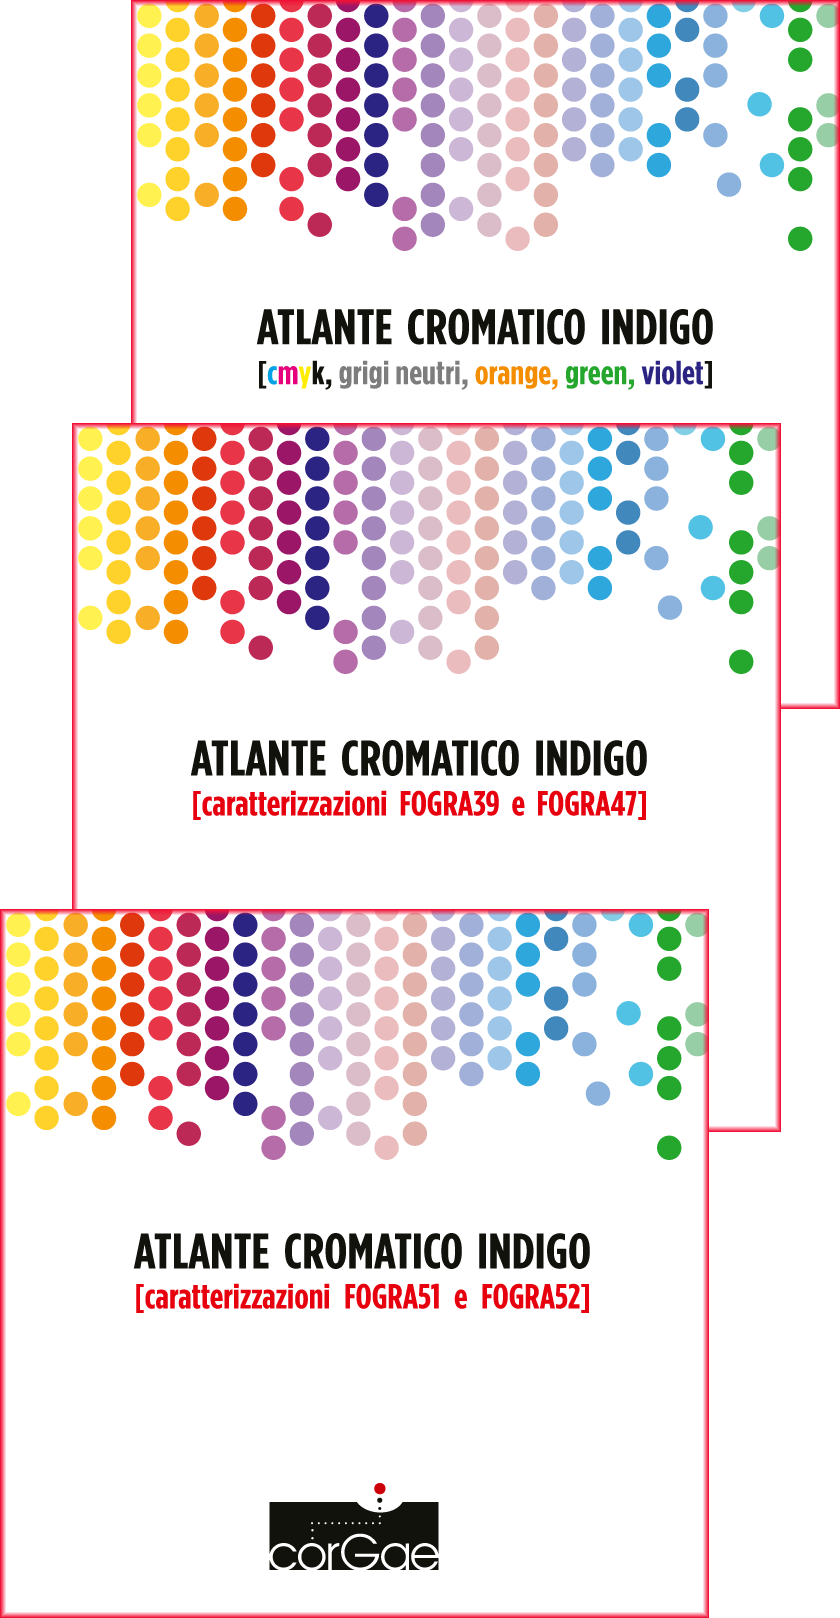 Atlanti Cromatici corGae